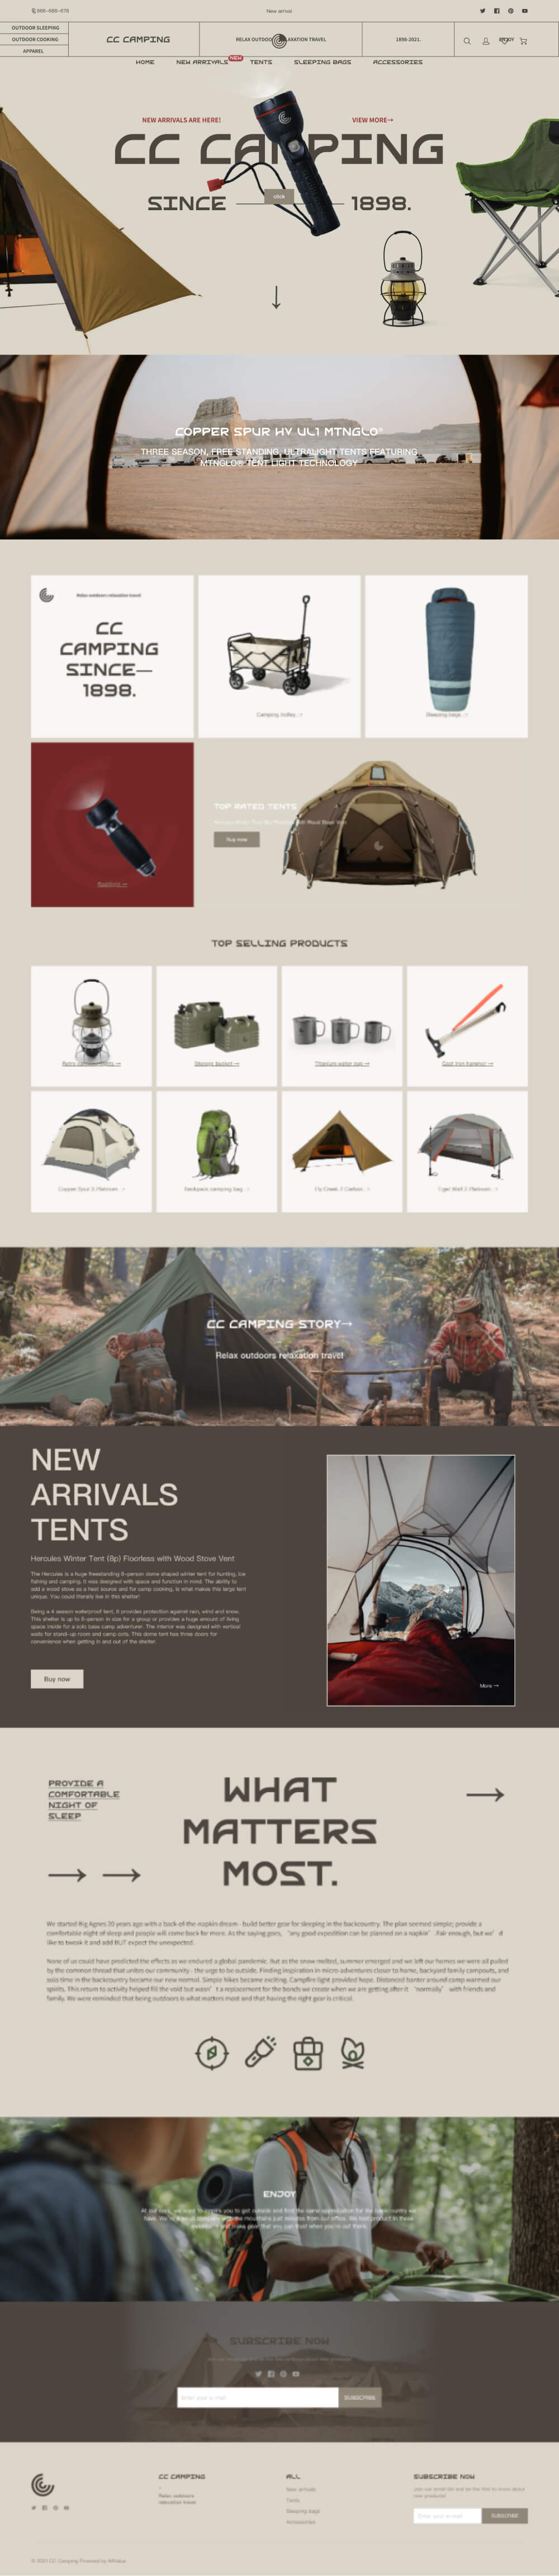 CC Camping